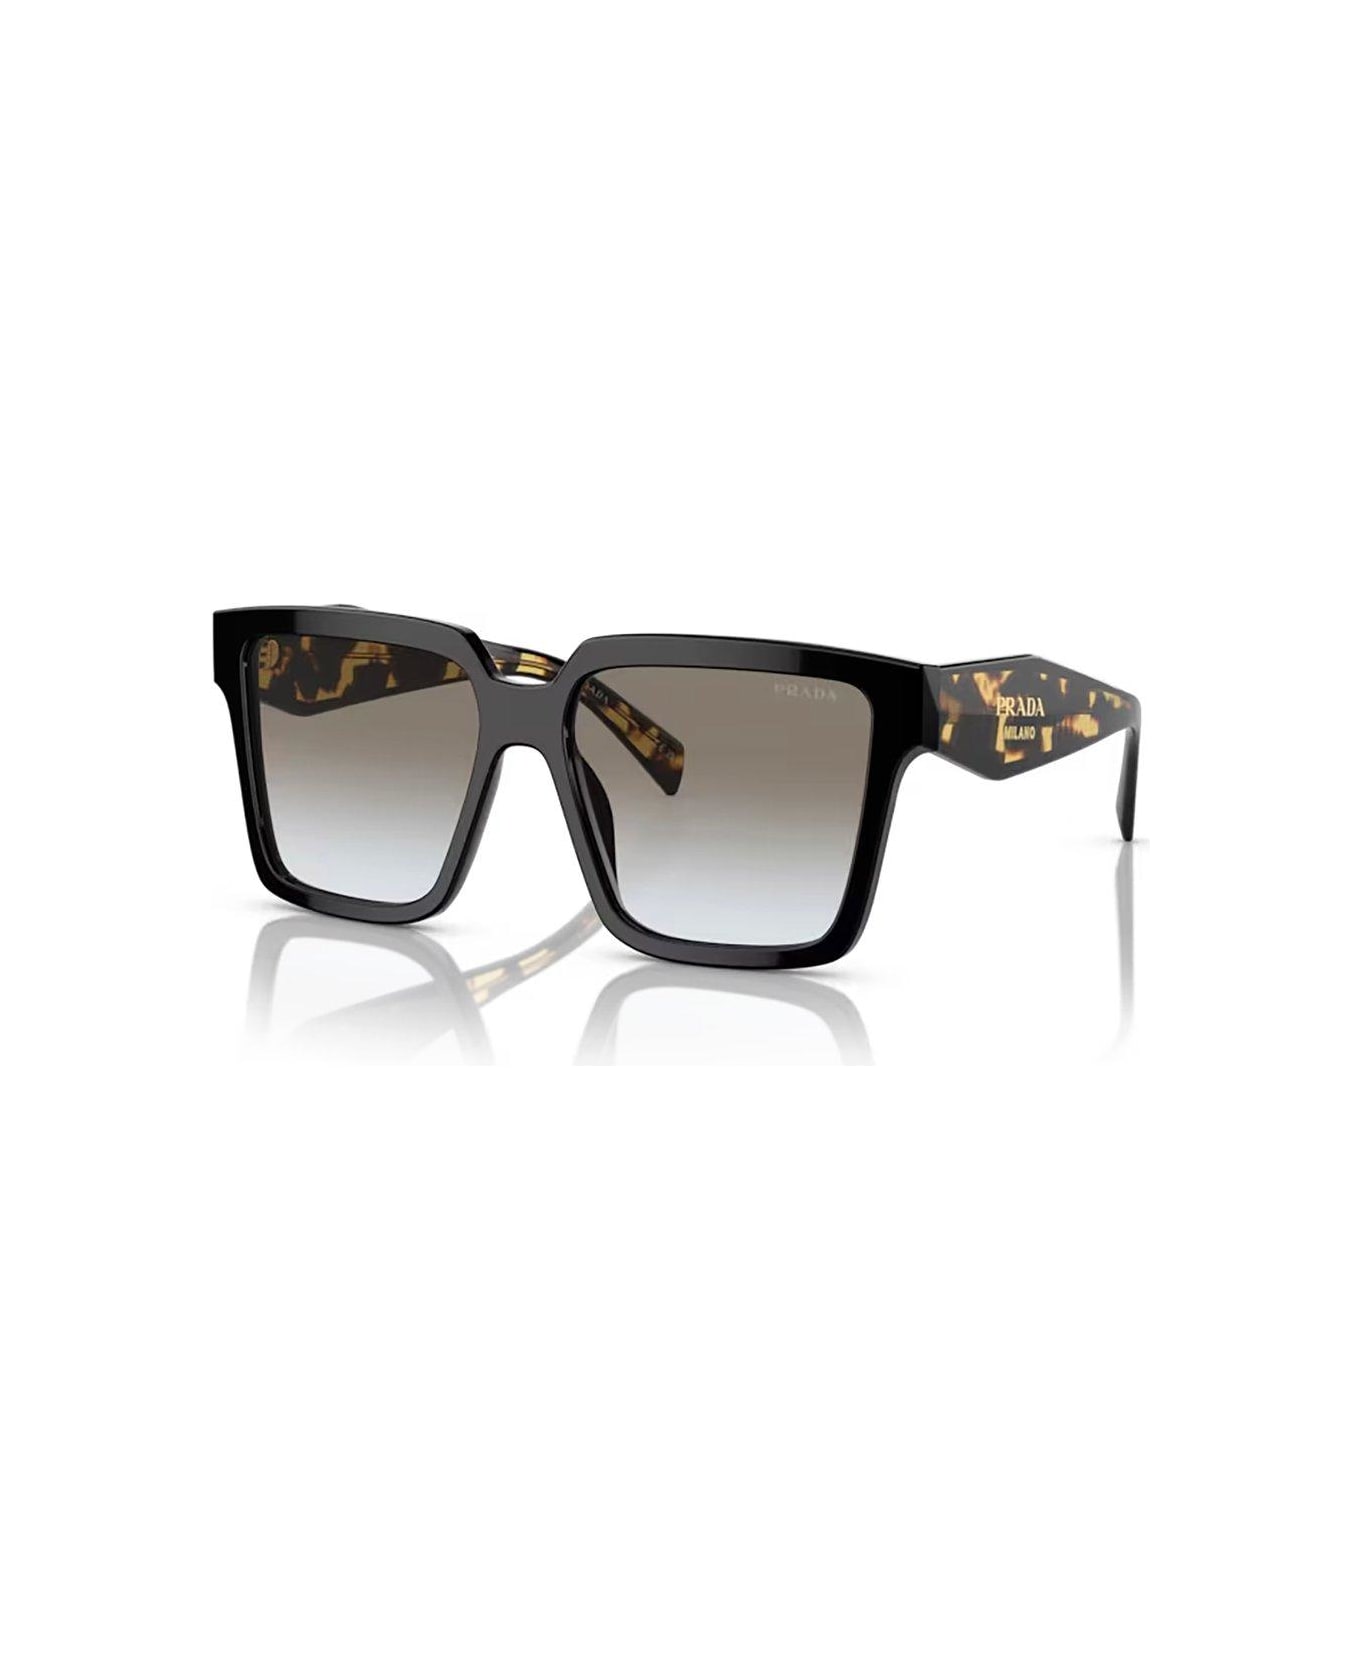 Prada Eyewear Square-frame Sunglasses Sunglasses - 1AB0A7 BLACK